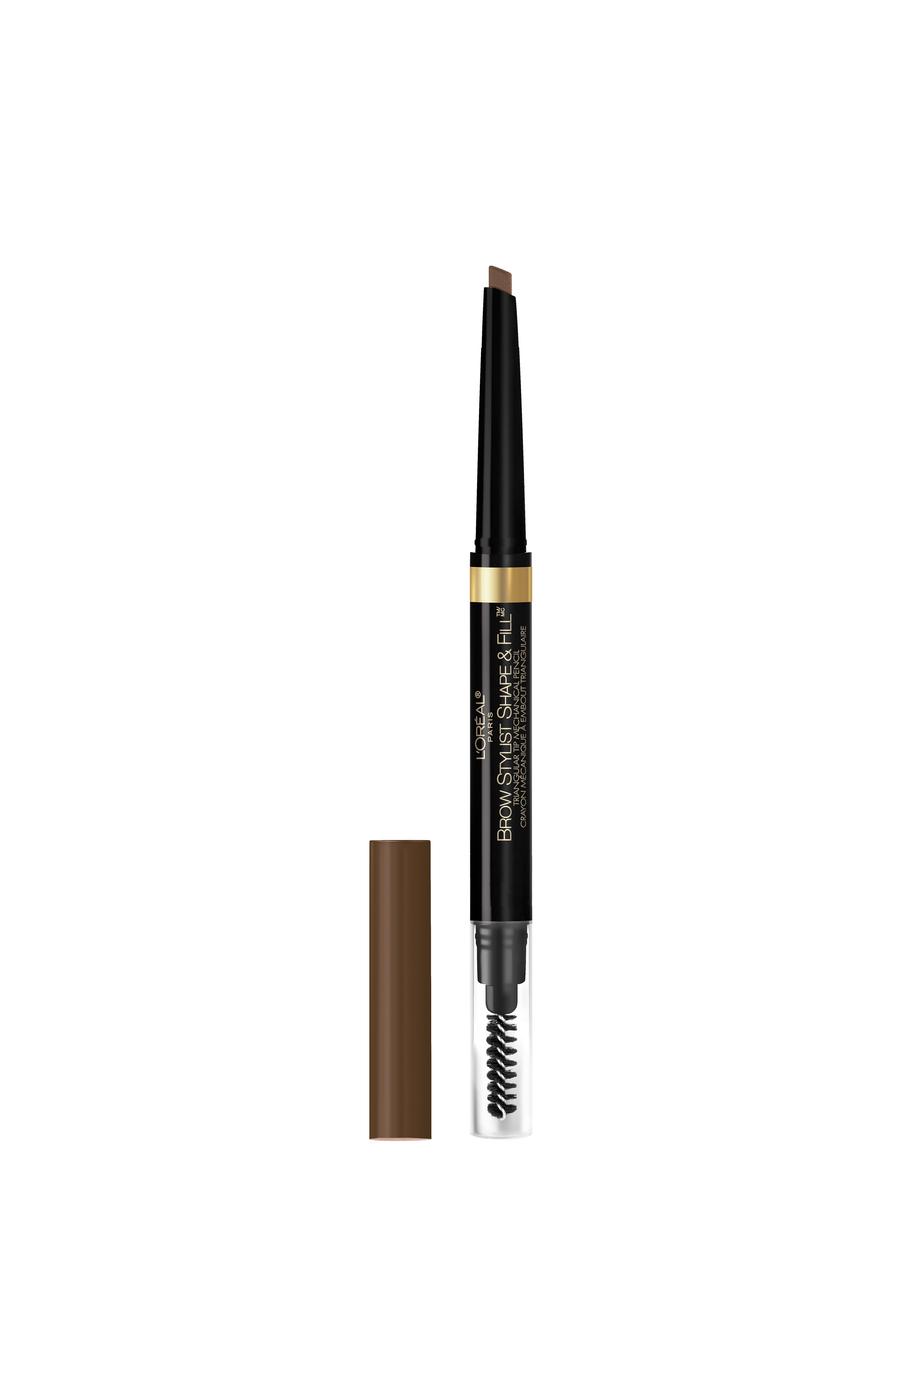 L'Oréal Paris Brow Stylist Shape and Fill Mechanical Eye Brow Makeup Pencil Light Brunette; image 2 of 3